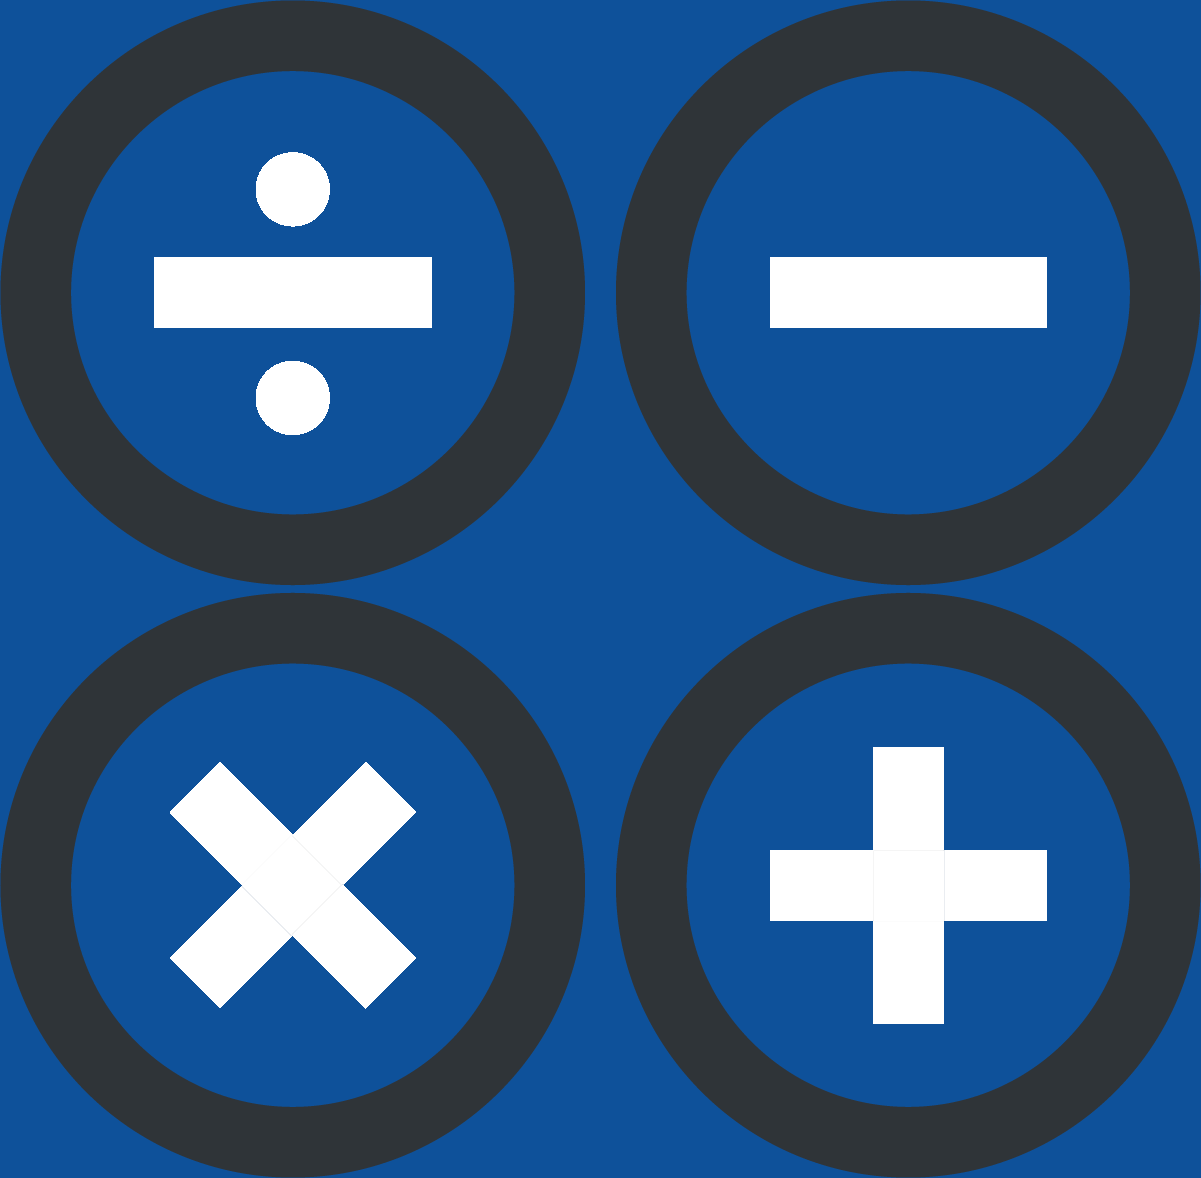 Math symbols